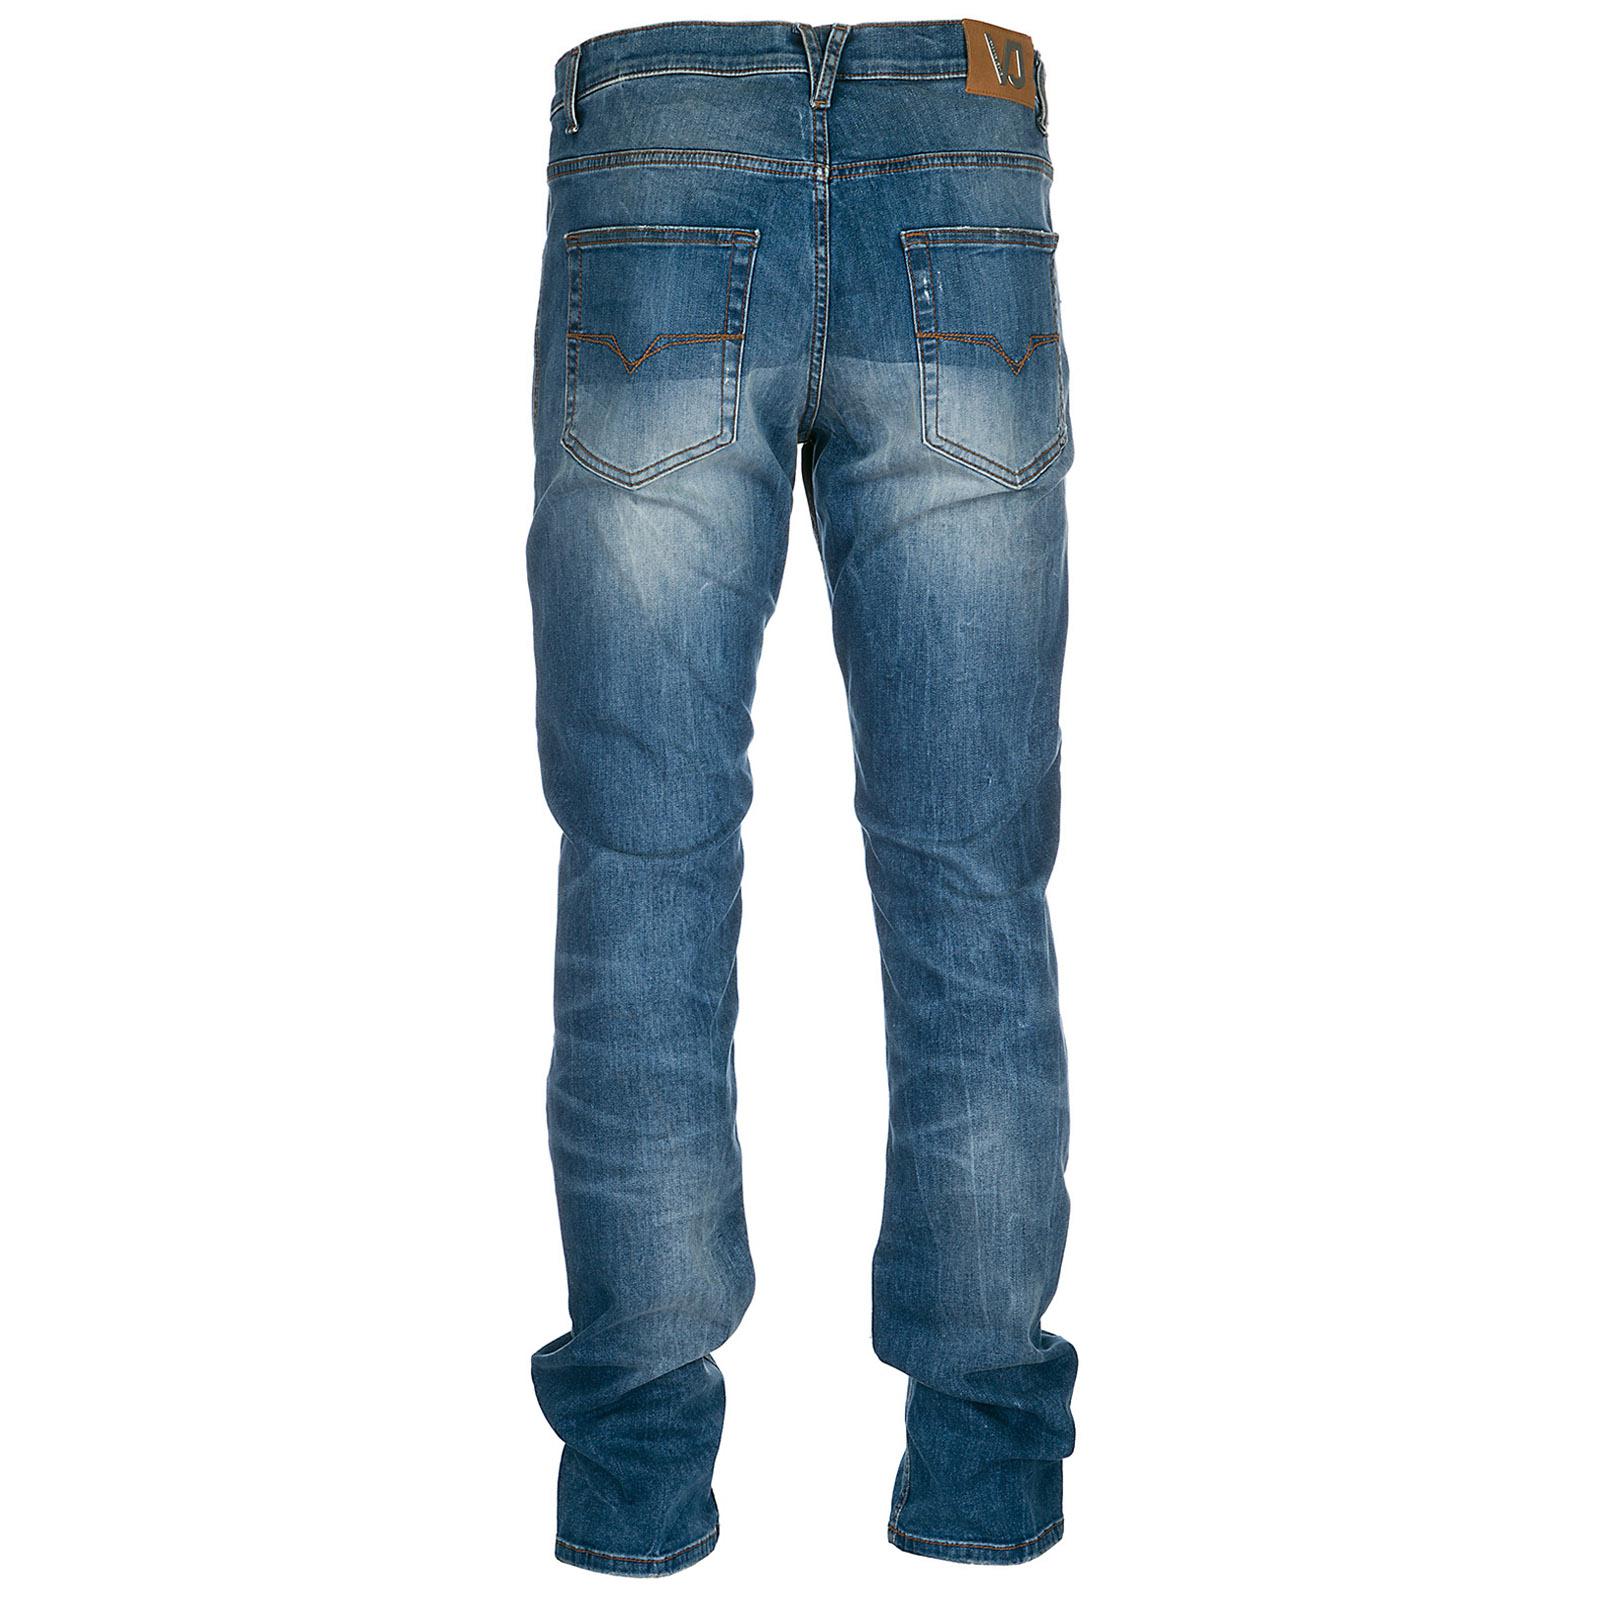 Versace Jeans Jeans Denim Slim in Blue for Men - Lyst